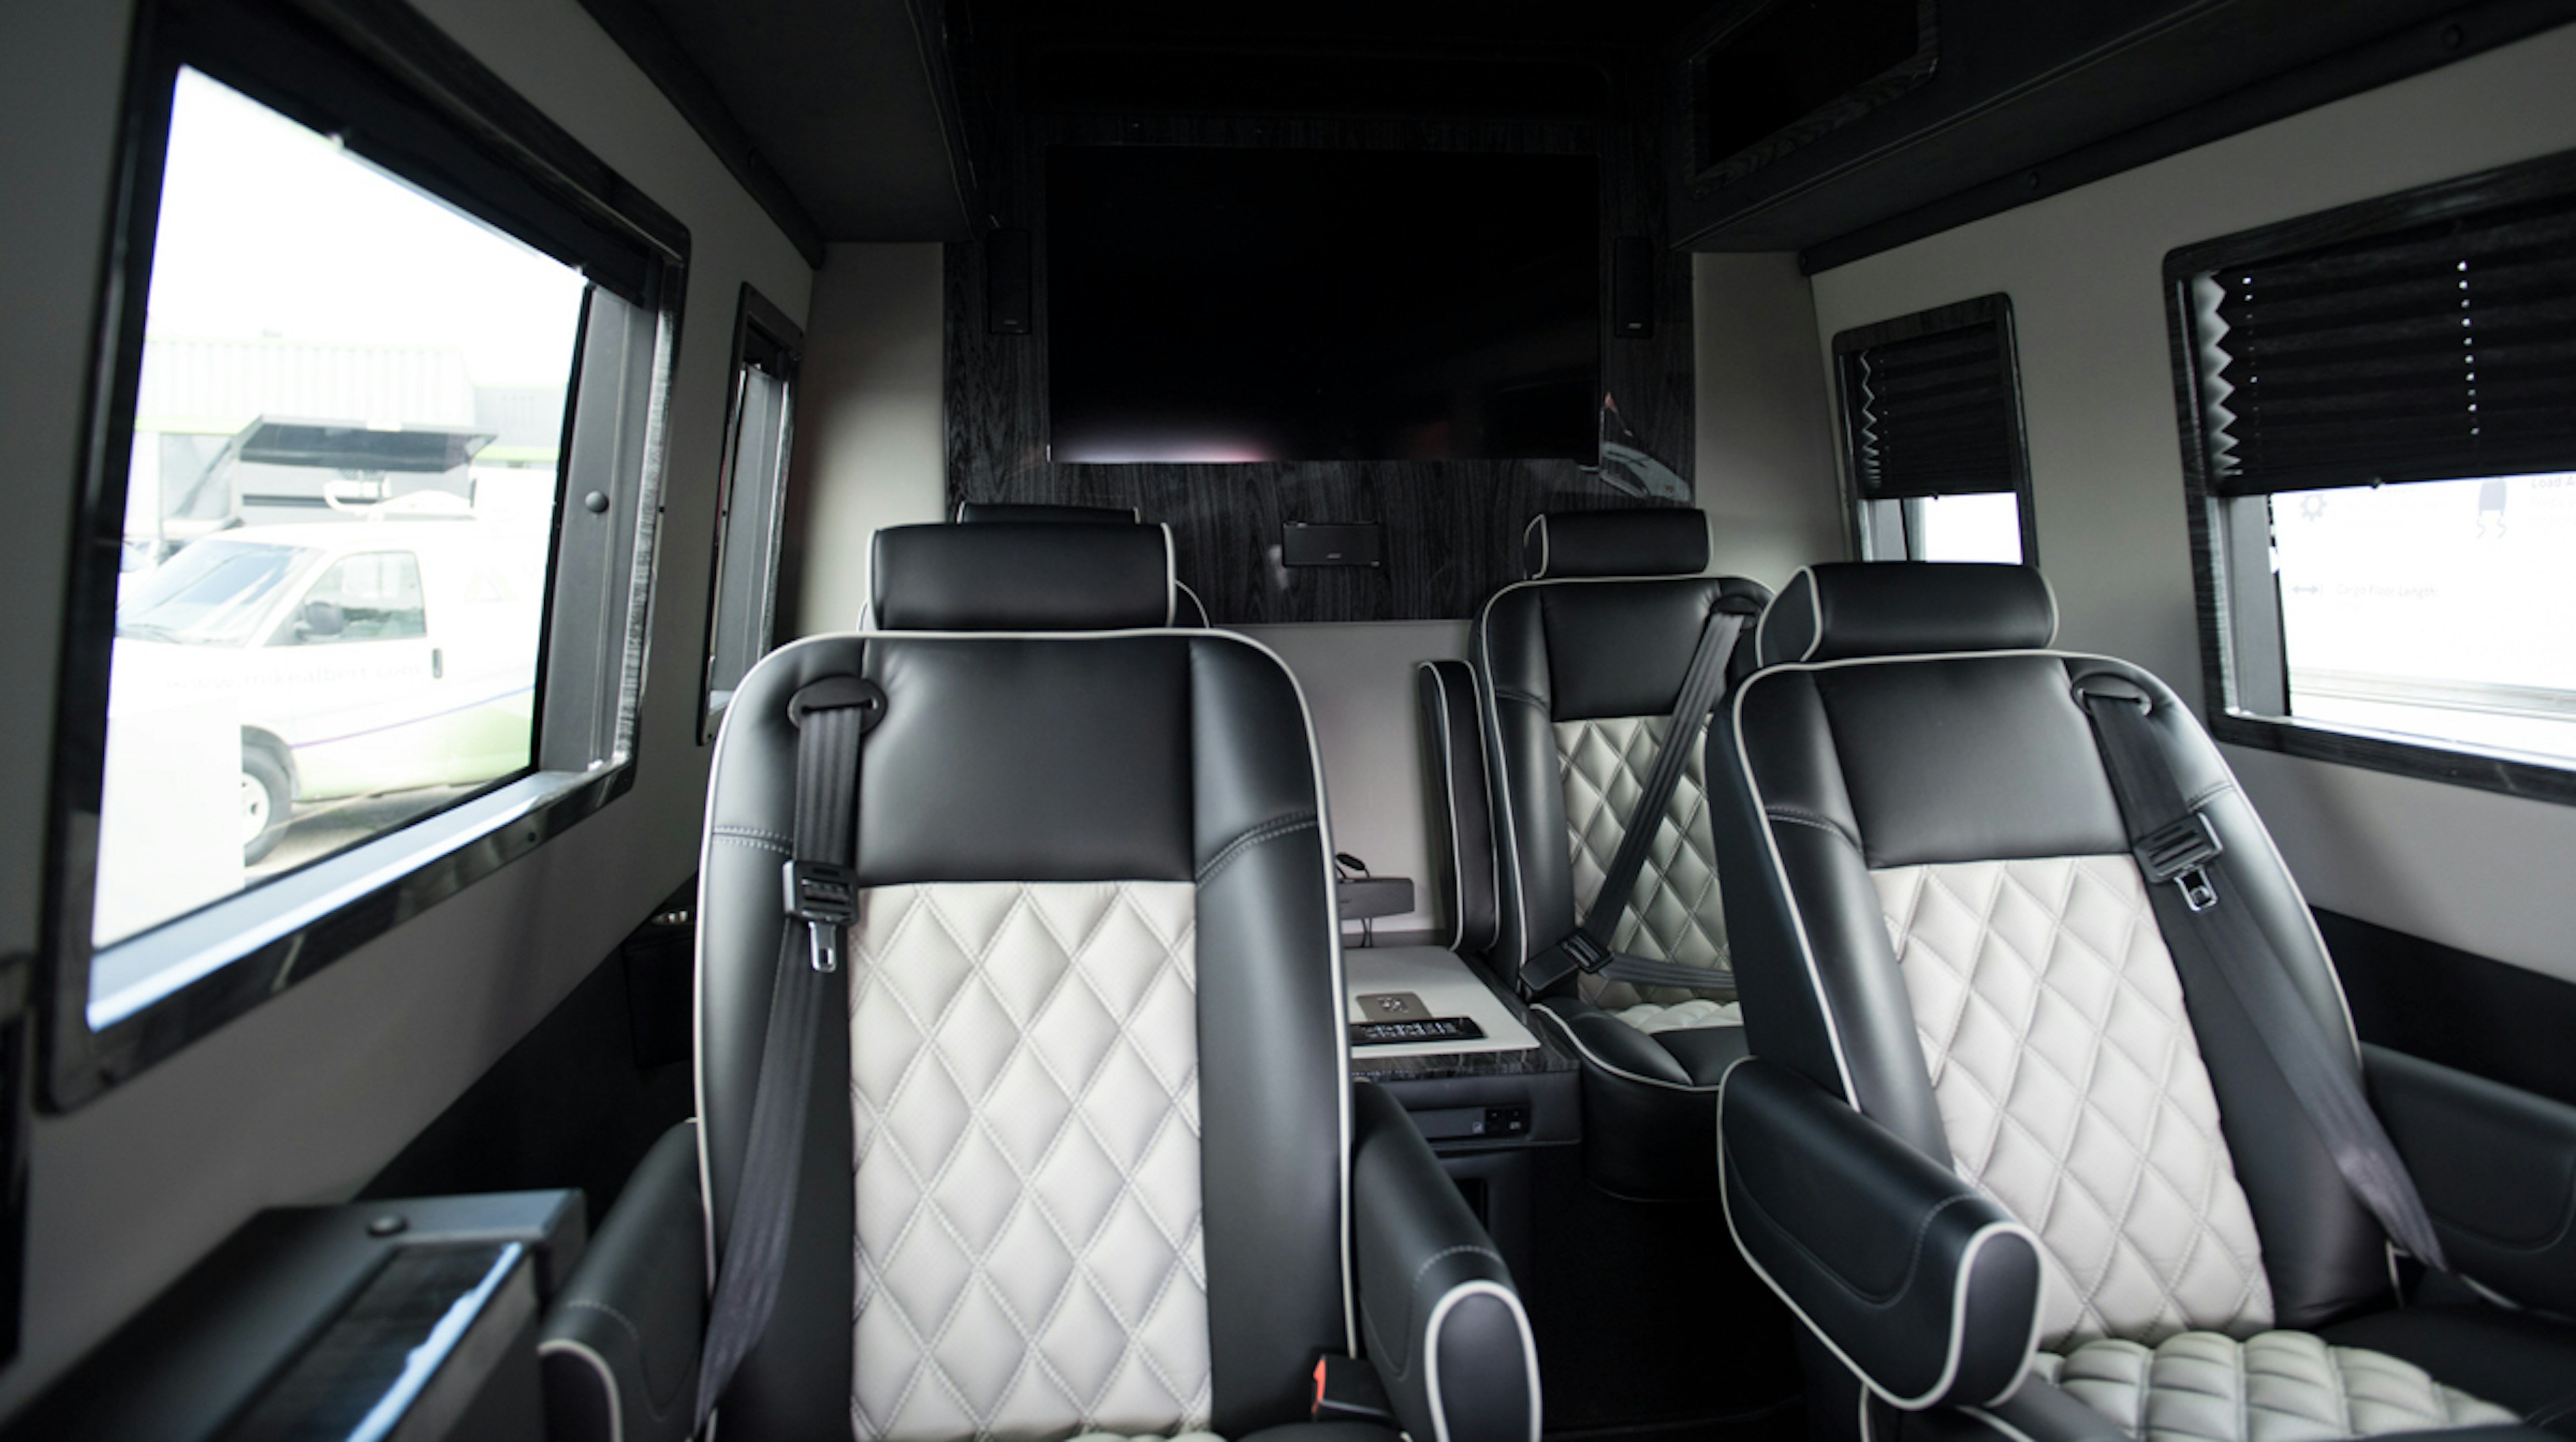 Luxury passenger van with executive seating options